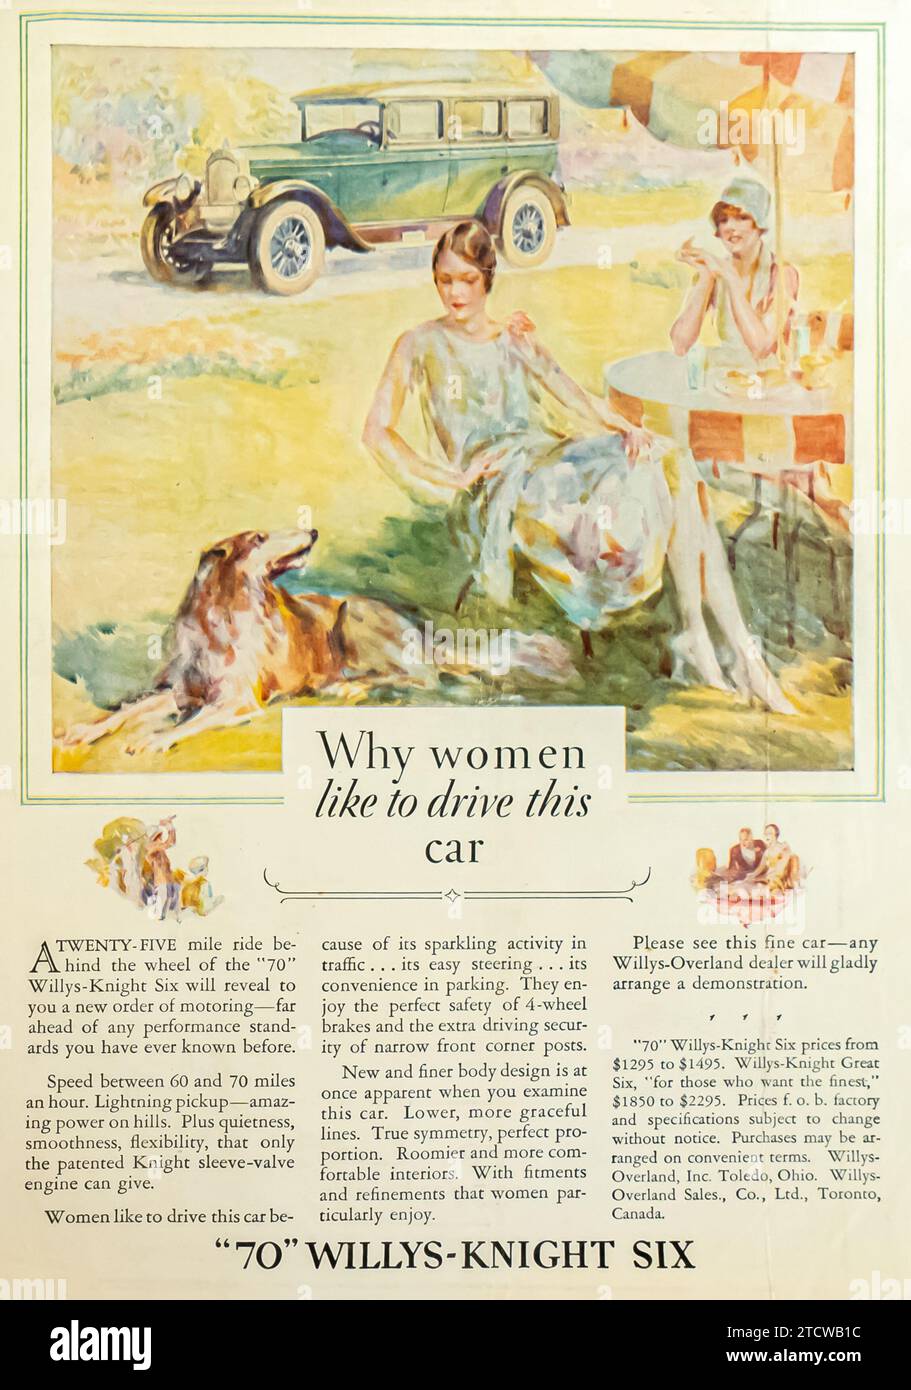 J. Mille & Cie (Girdles) 1948 — Advertisement